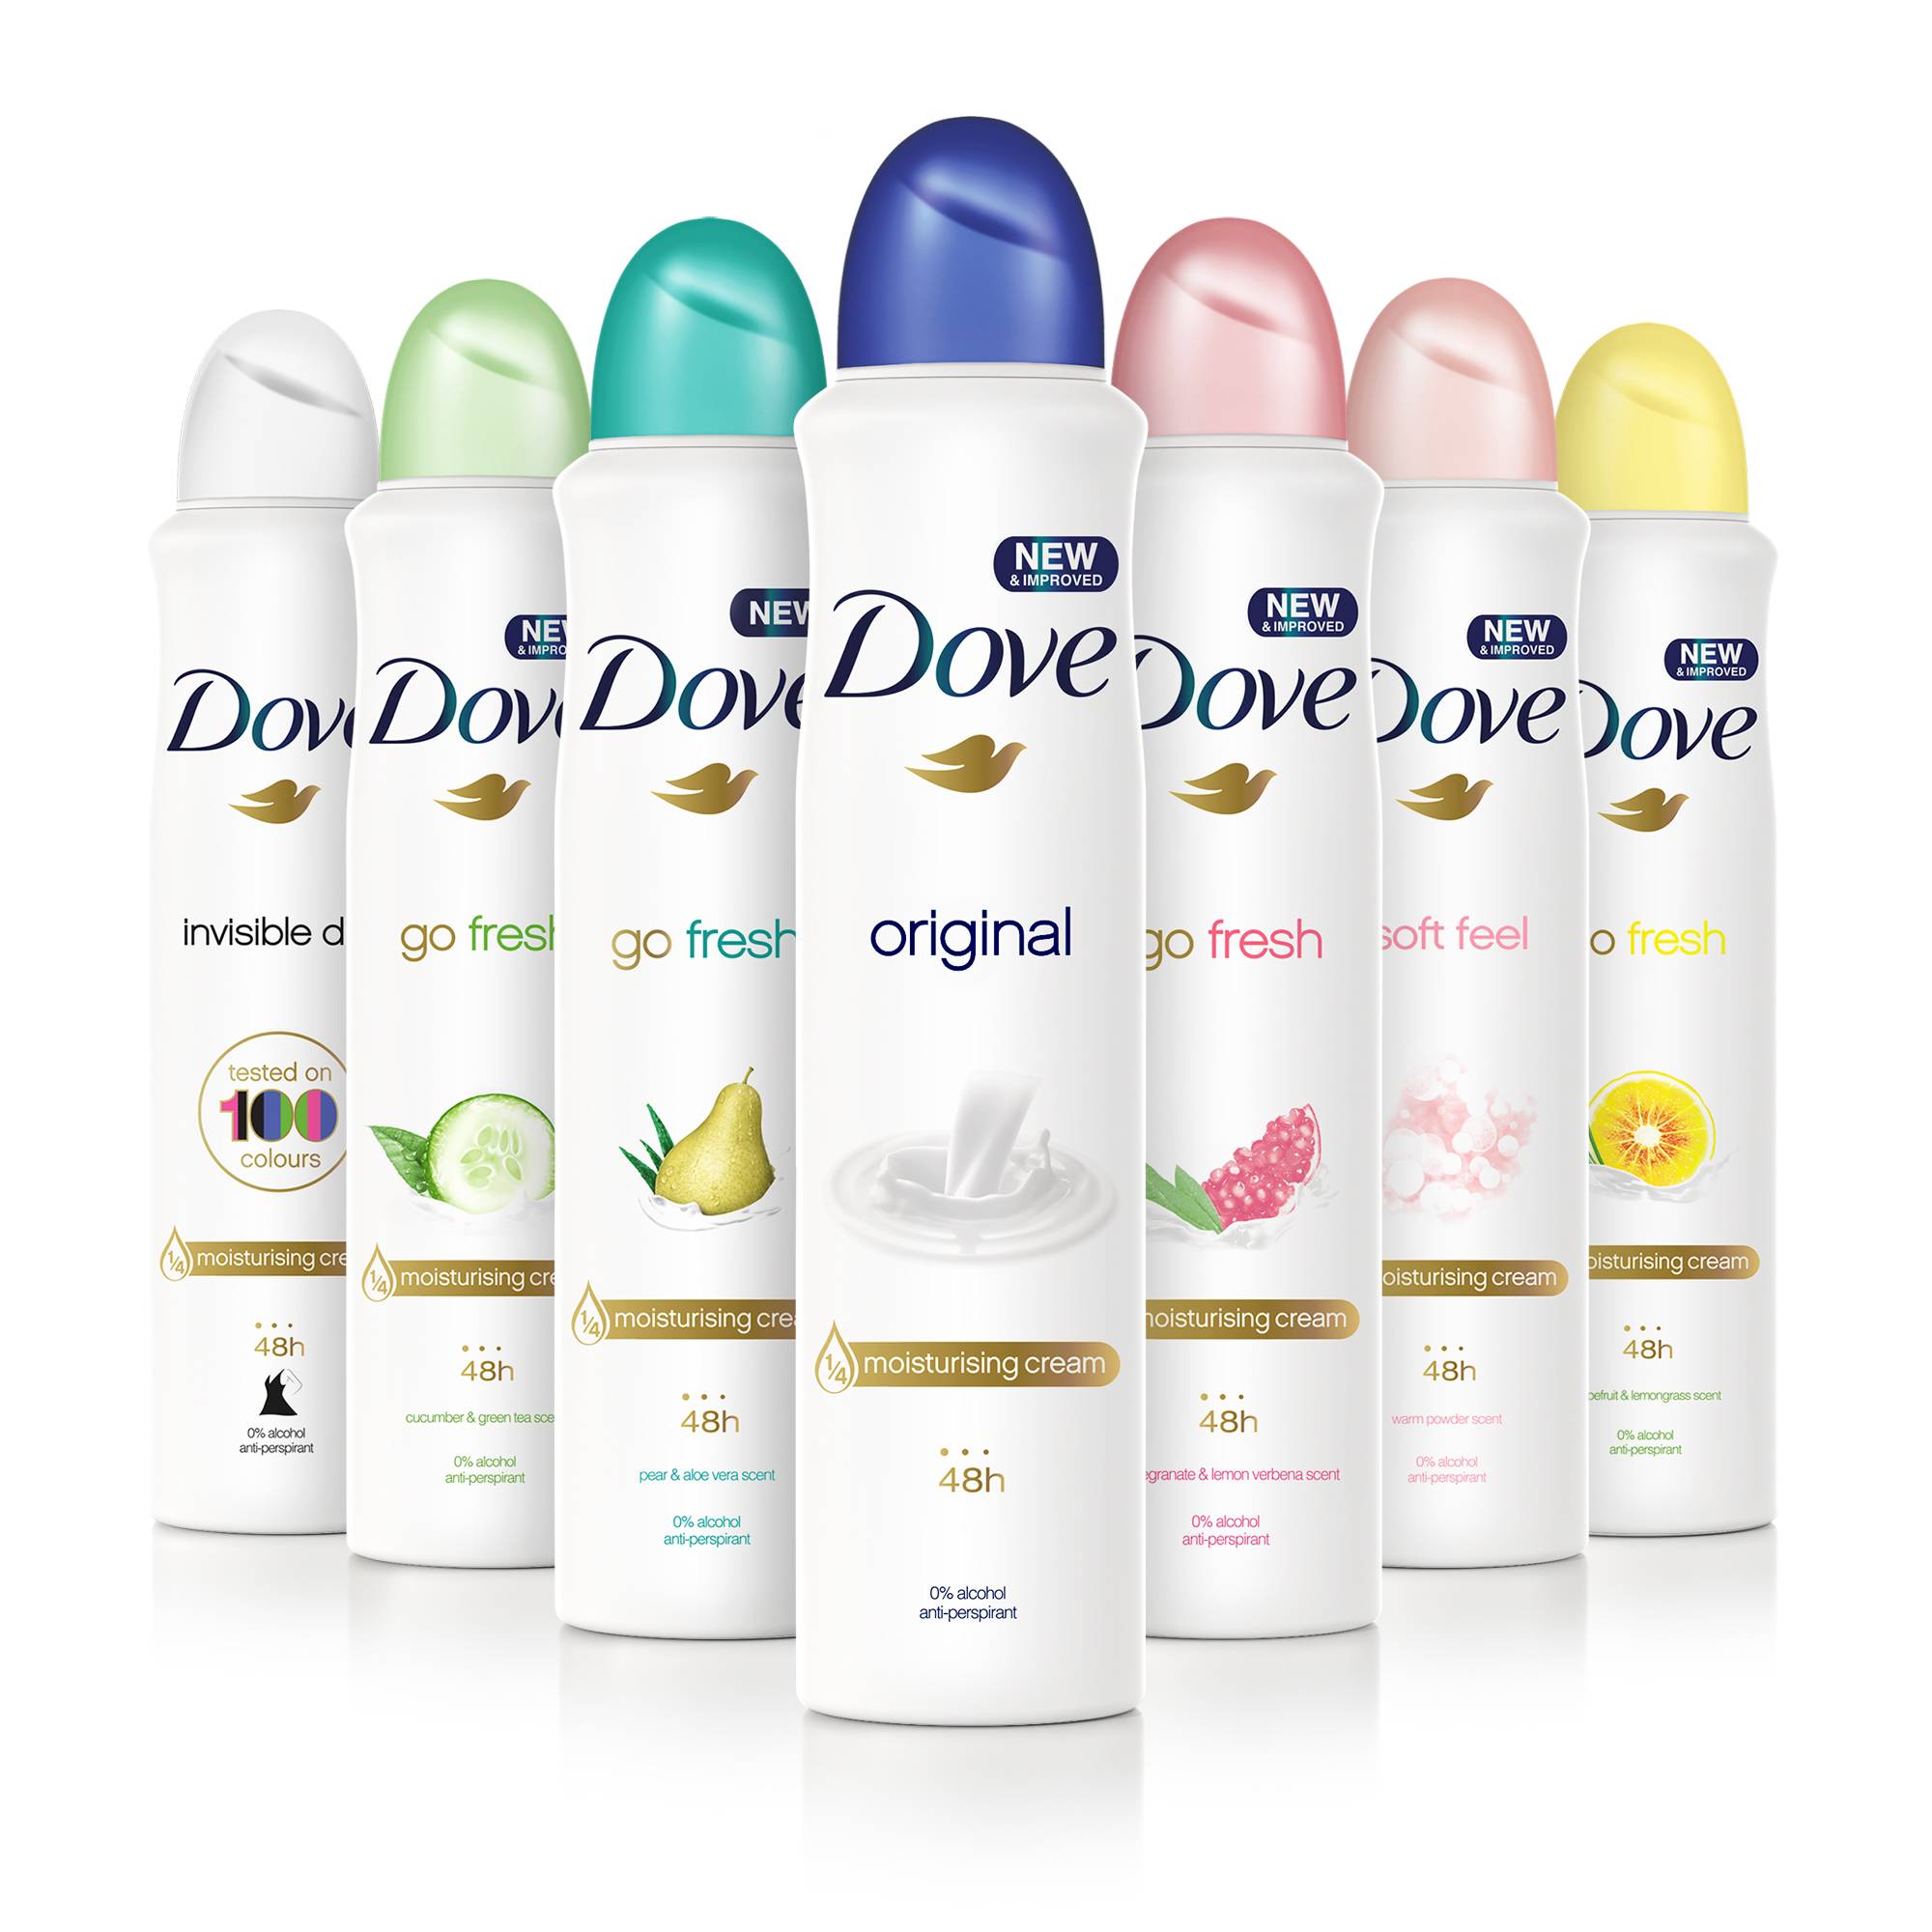 dove deodorant range portfolio brand care deo formula body redesigns adds antiperspirant skin